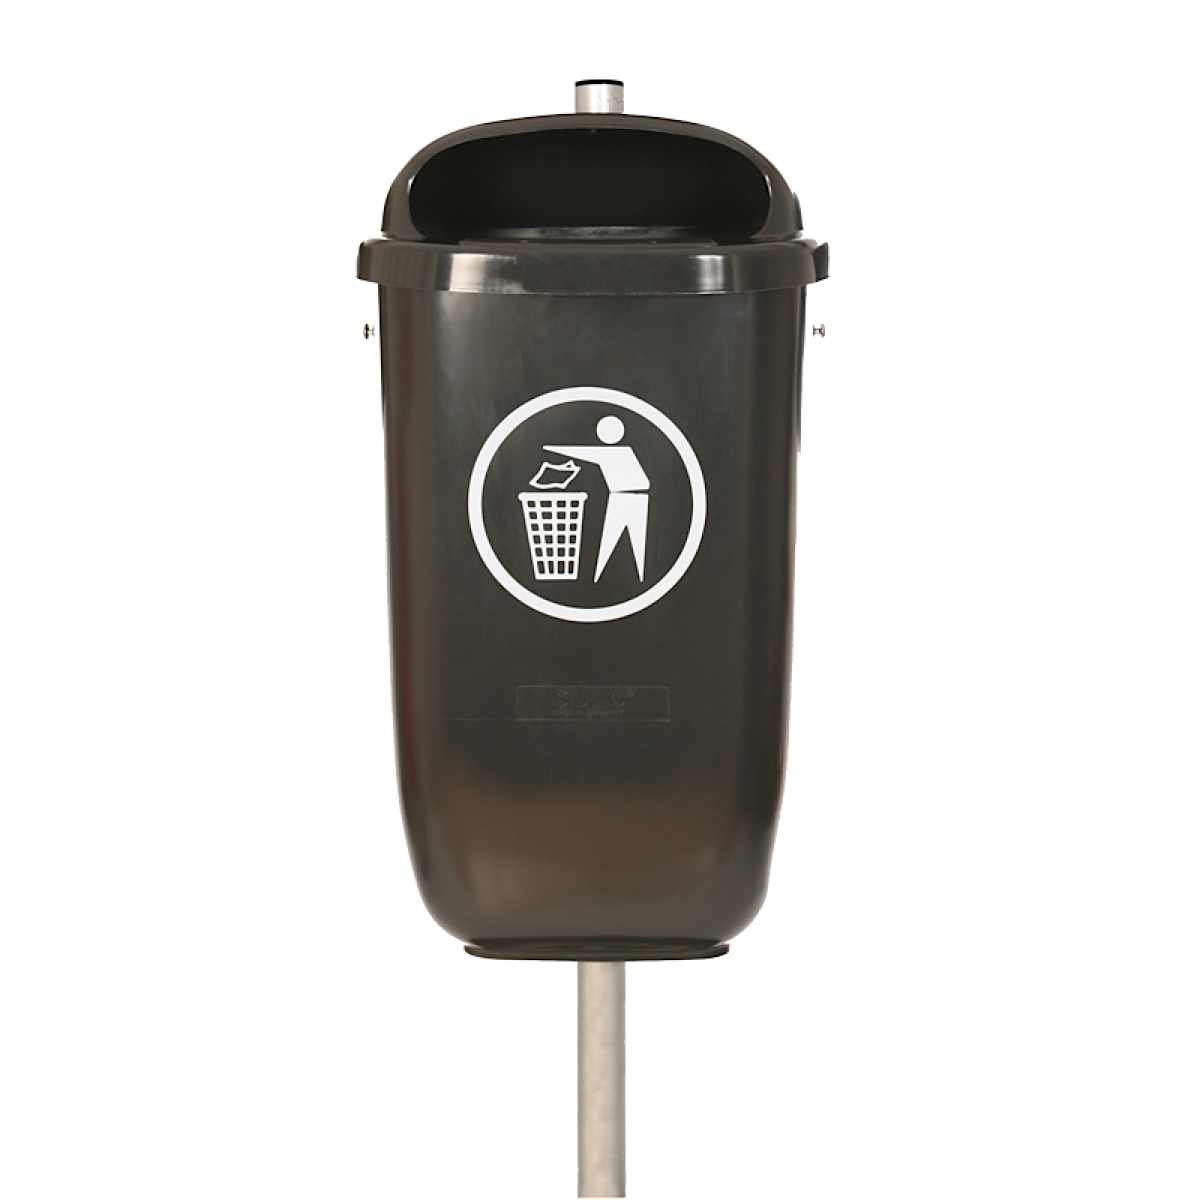 Abfallbehälter Kunststoff Flexi, mit Säule, schwarzgrau